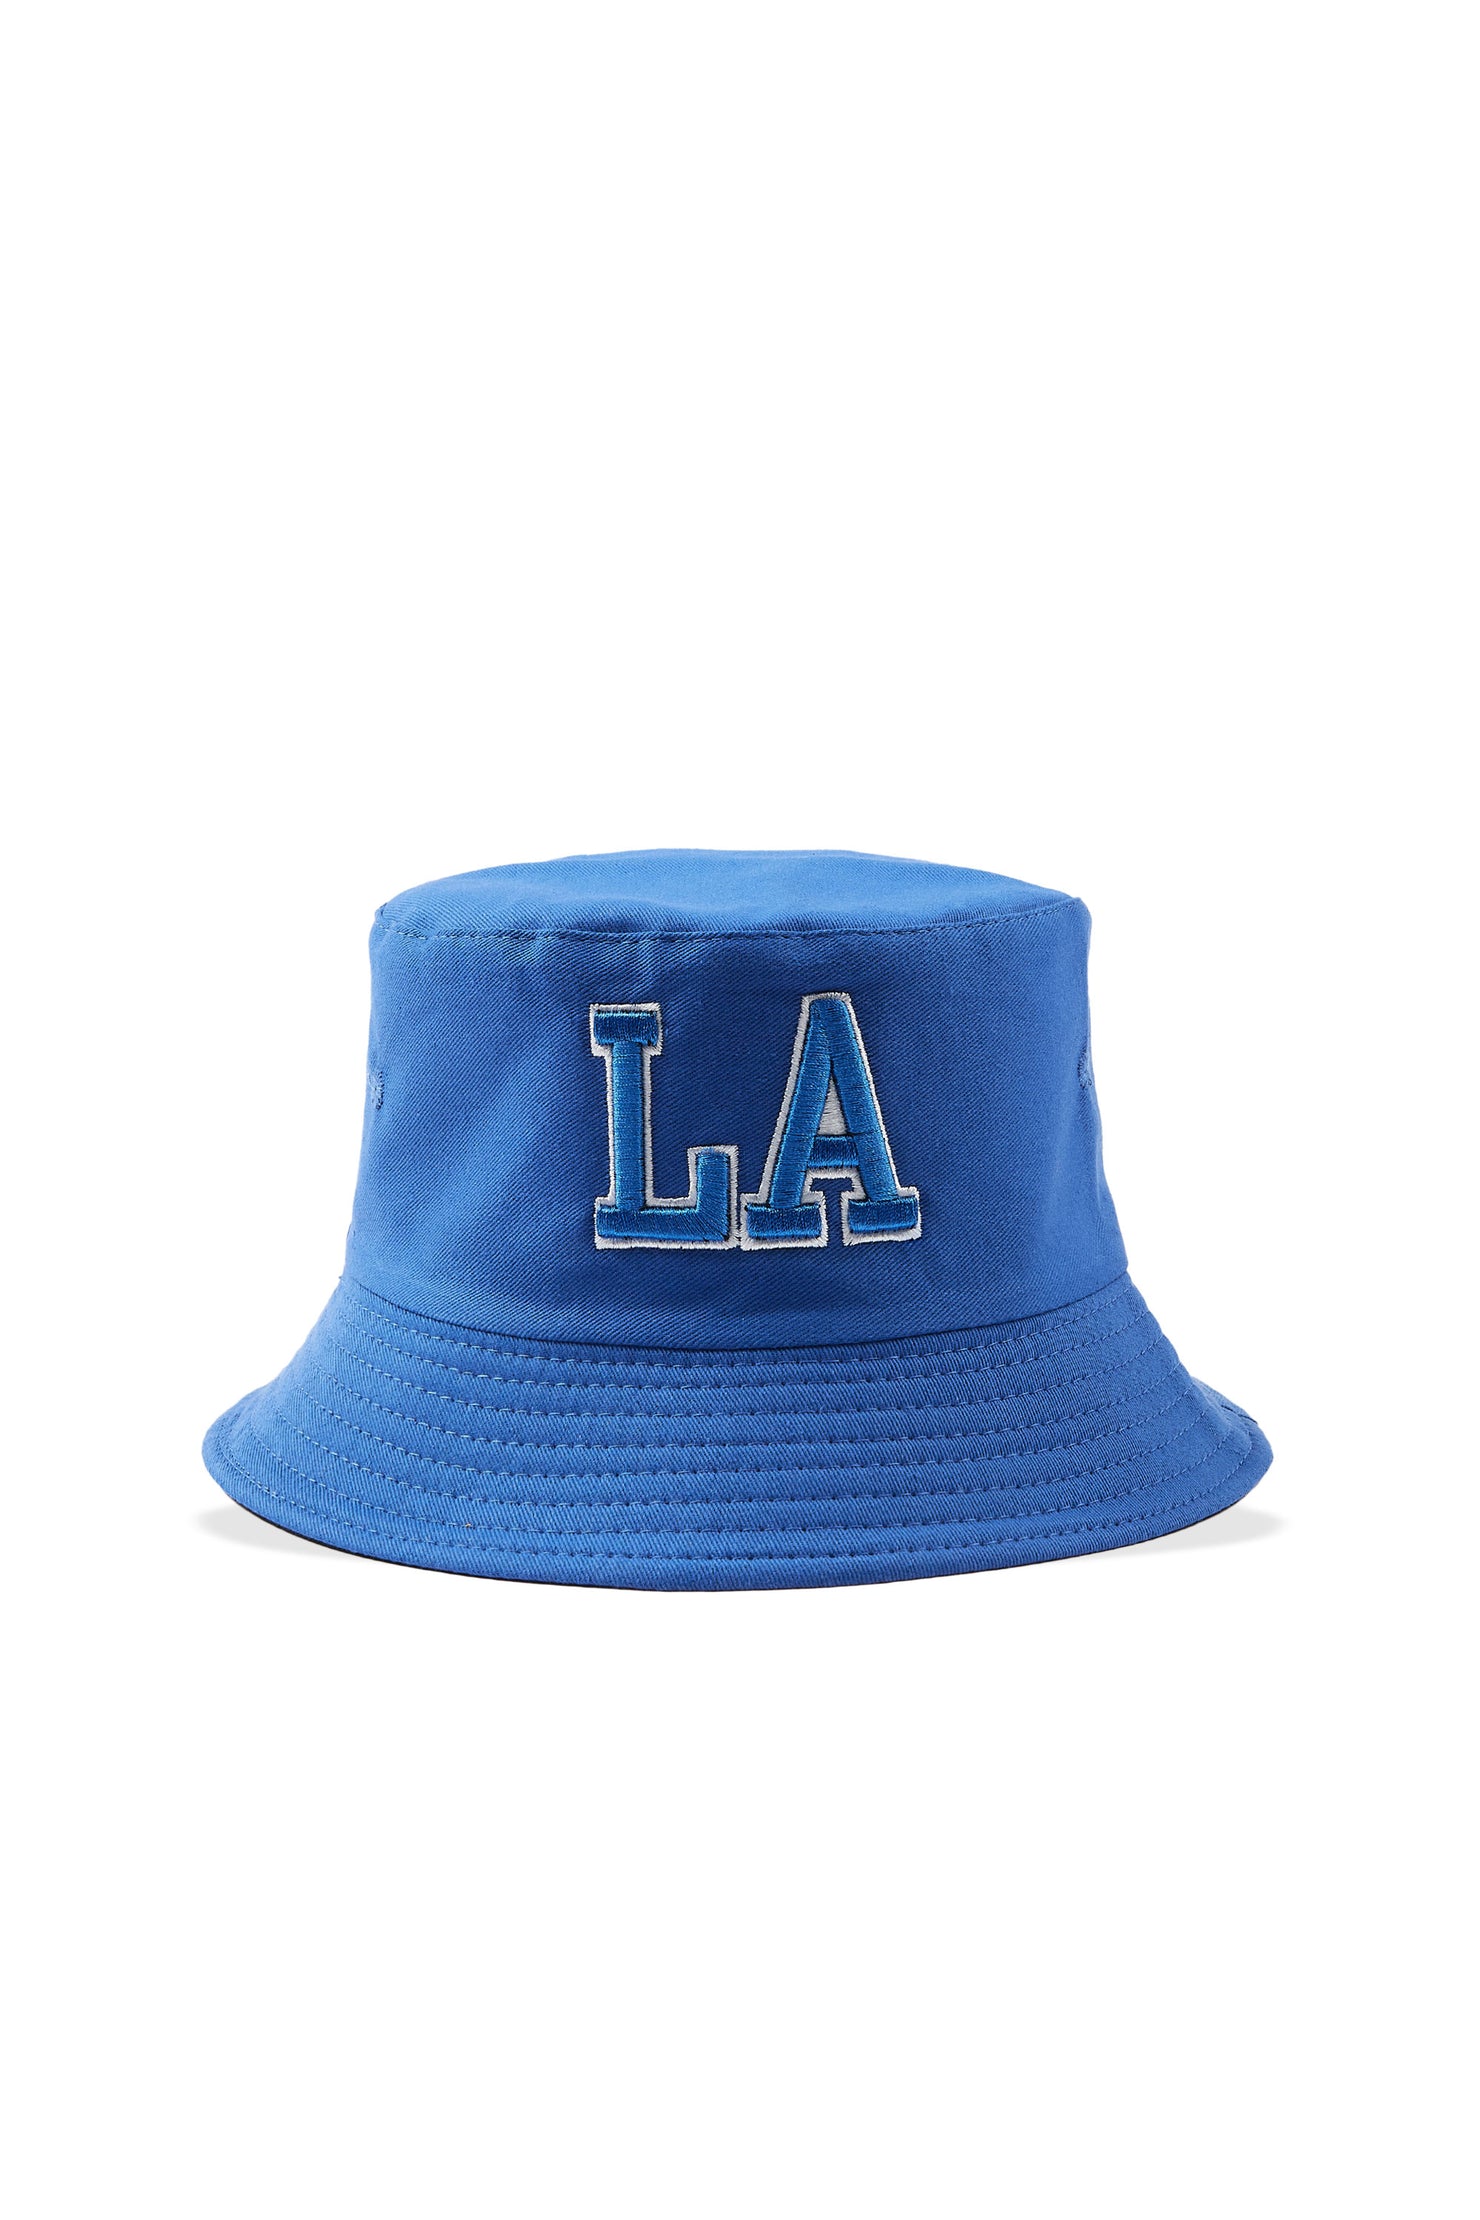 Boys LA Royal Blue Bucket Hat